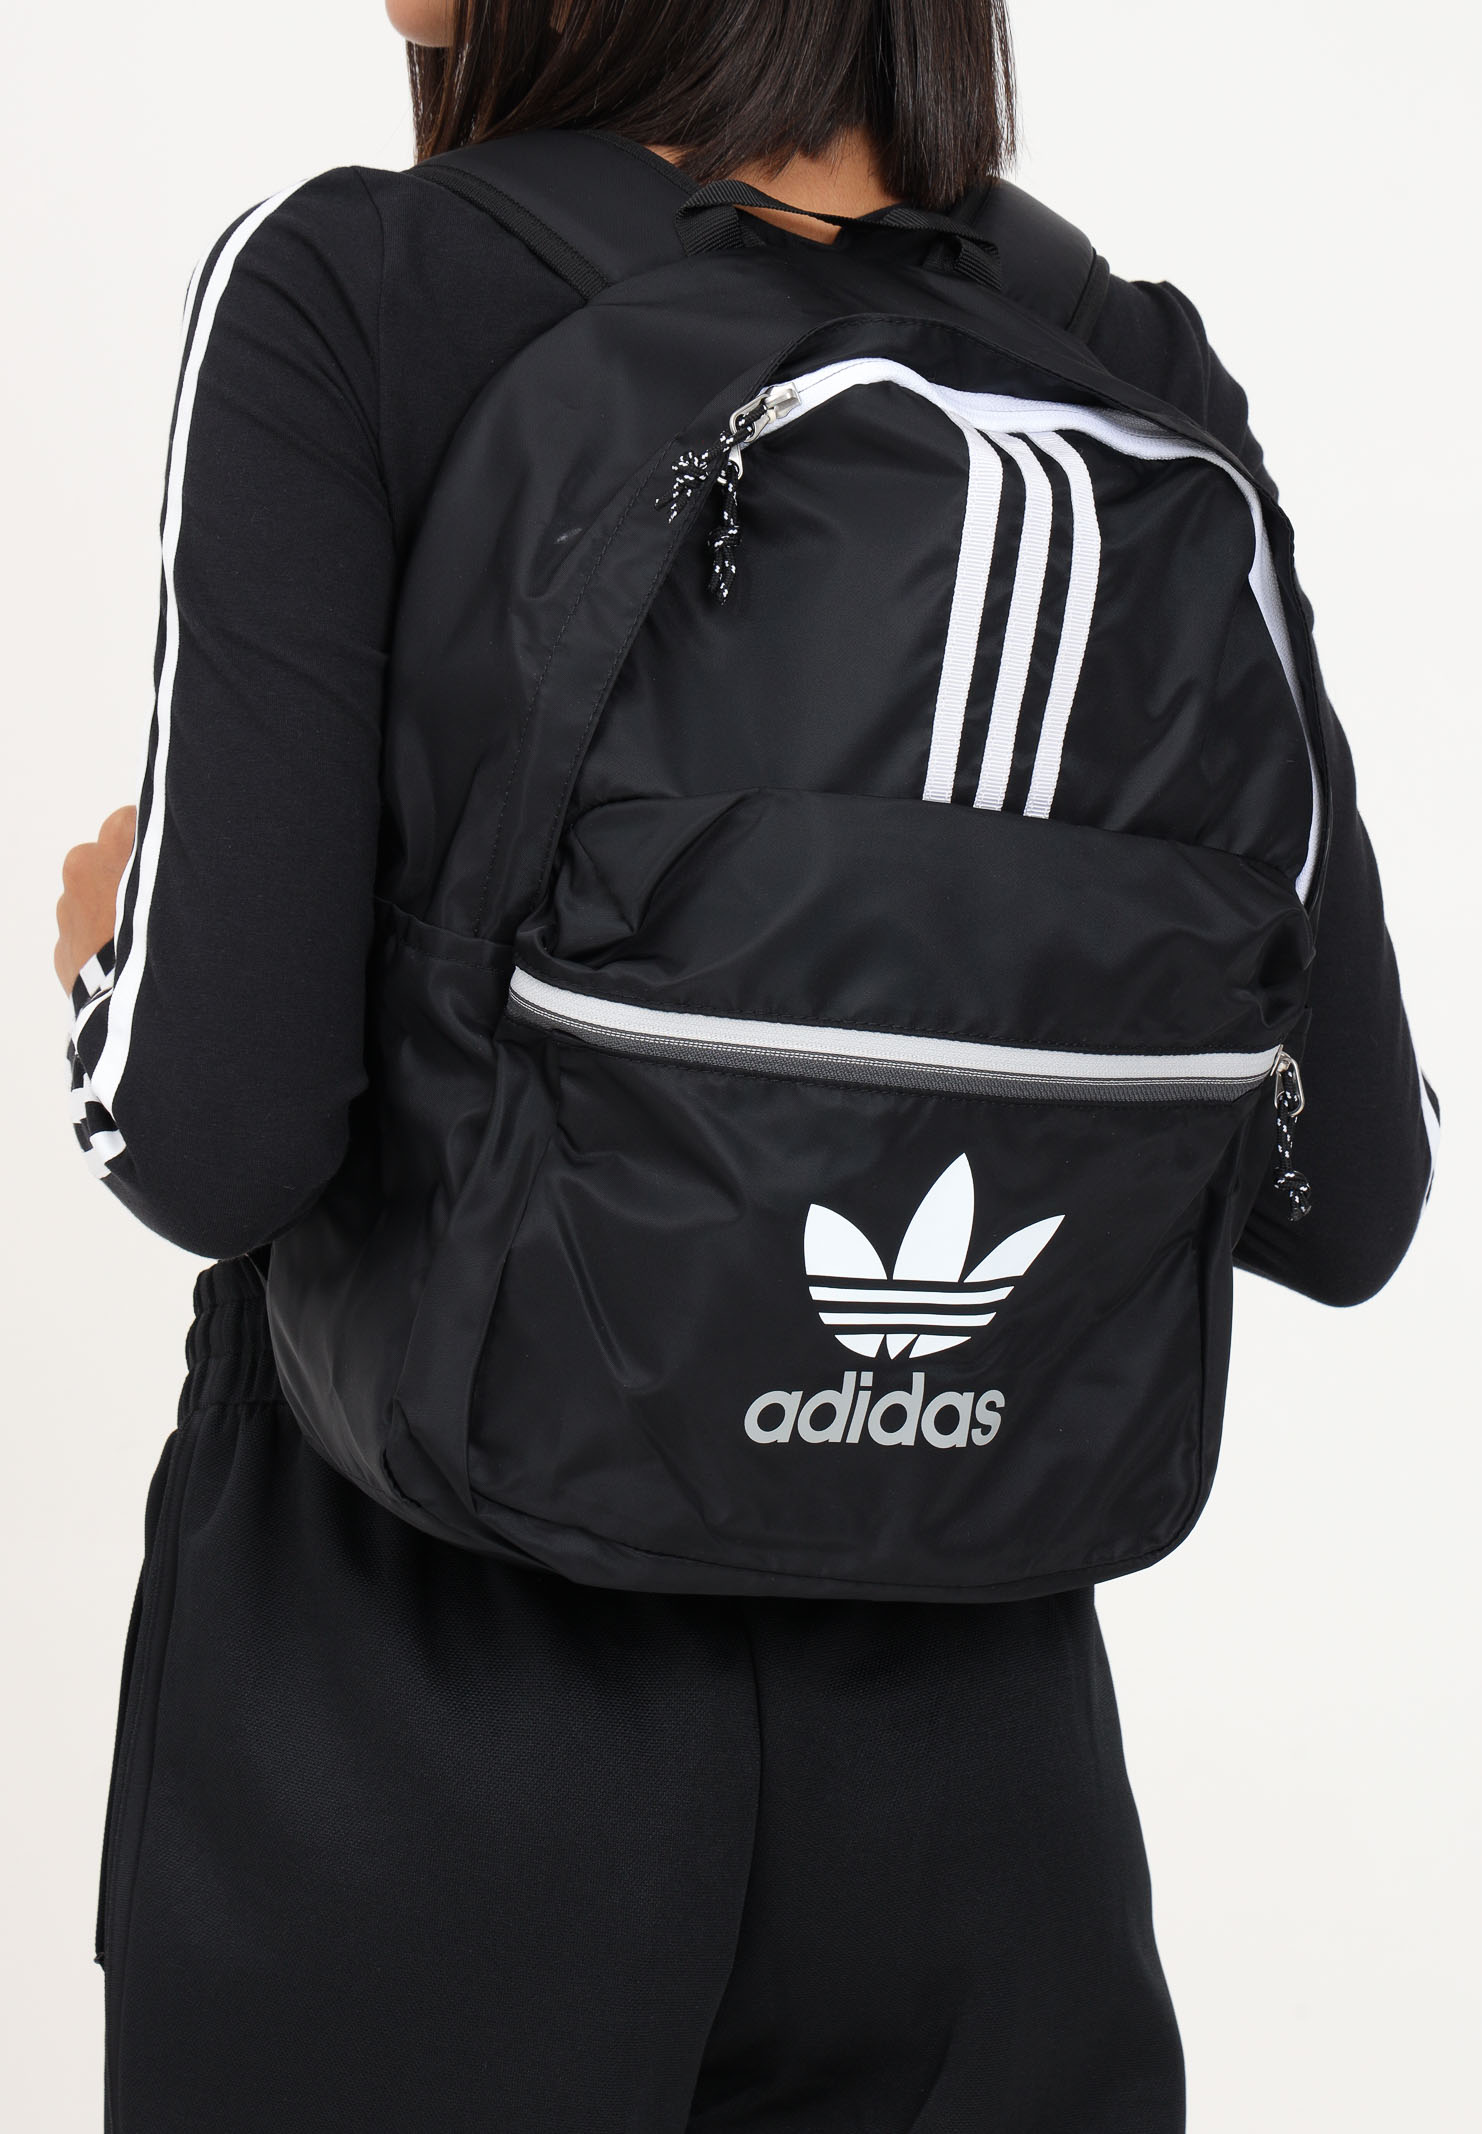 Black backpack for men and women Adicolor Archive - ADIDAS ORIGINALS -  Pavidas